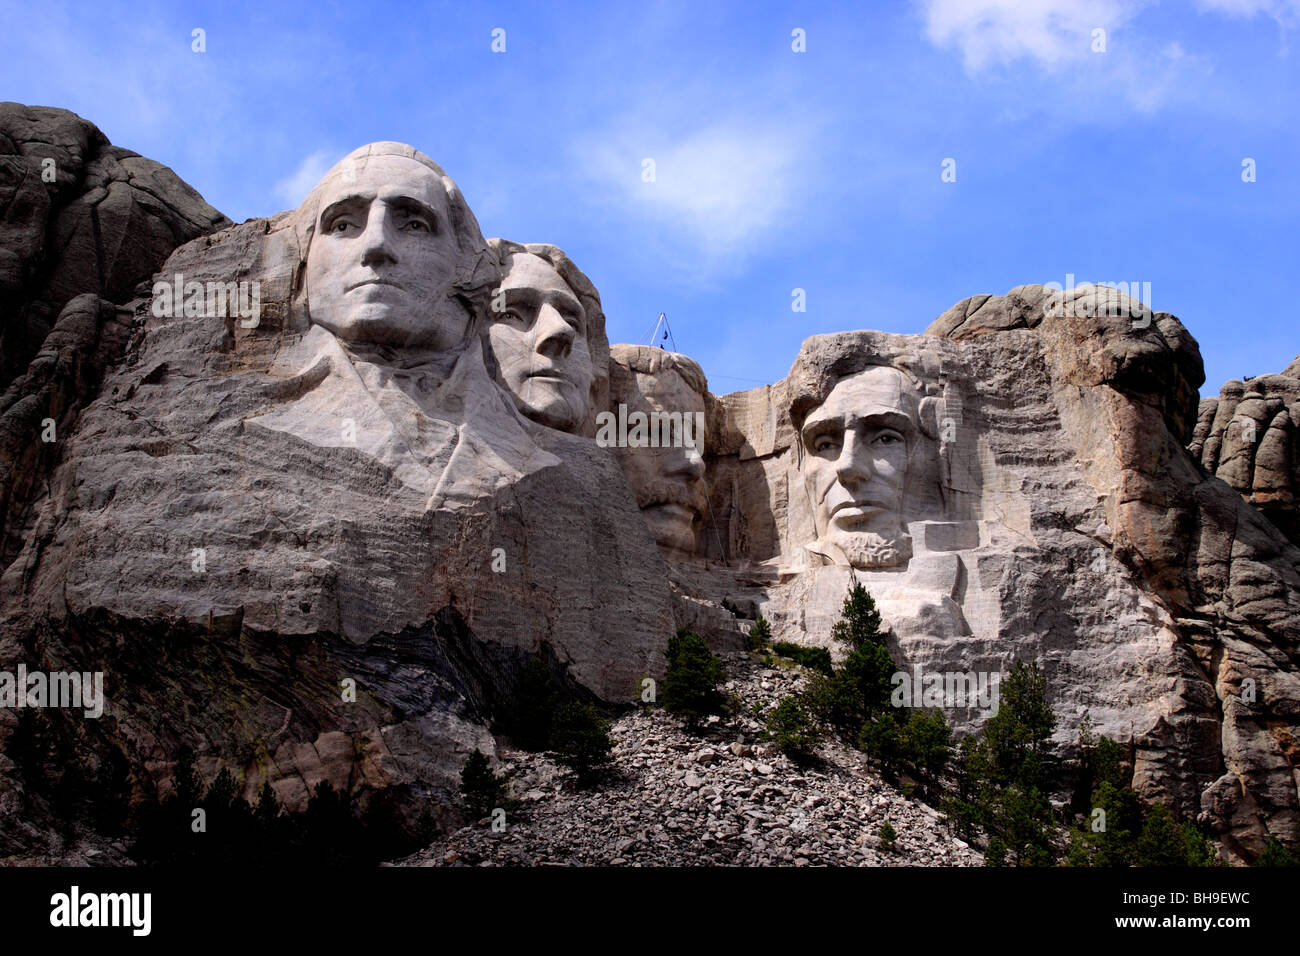 Mount Rushmore National Memorial dans le Dakota du Sud, USA. Banque D'Images